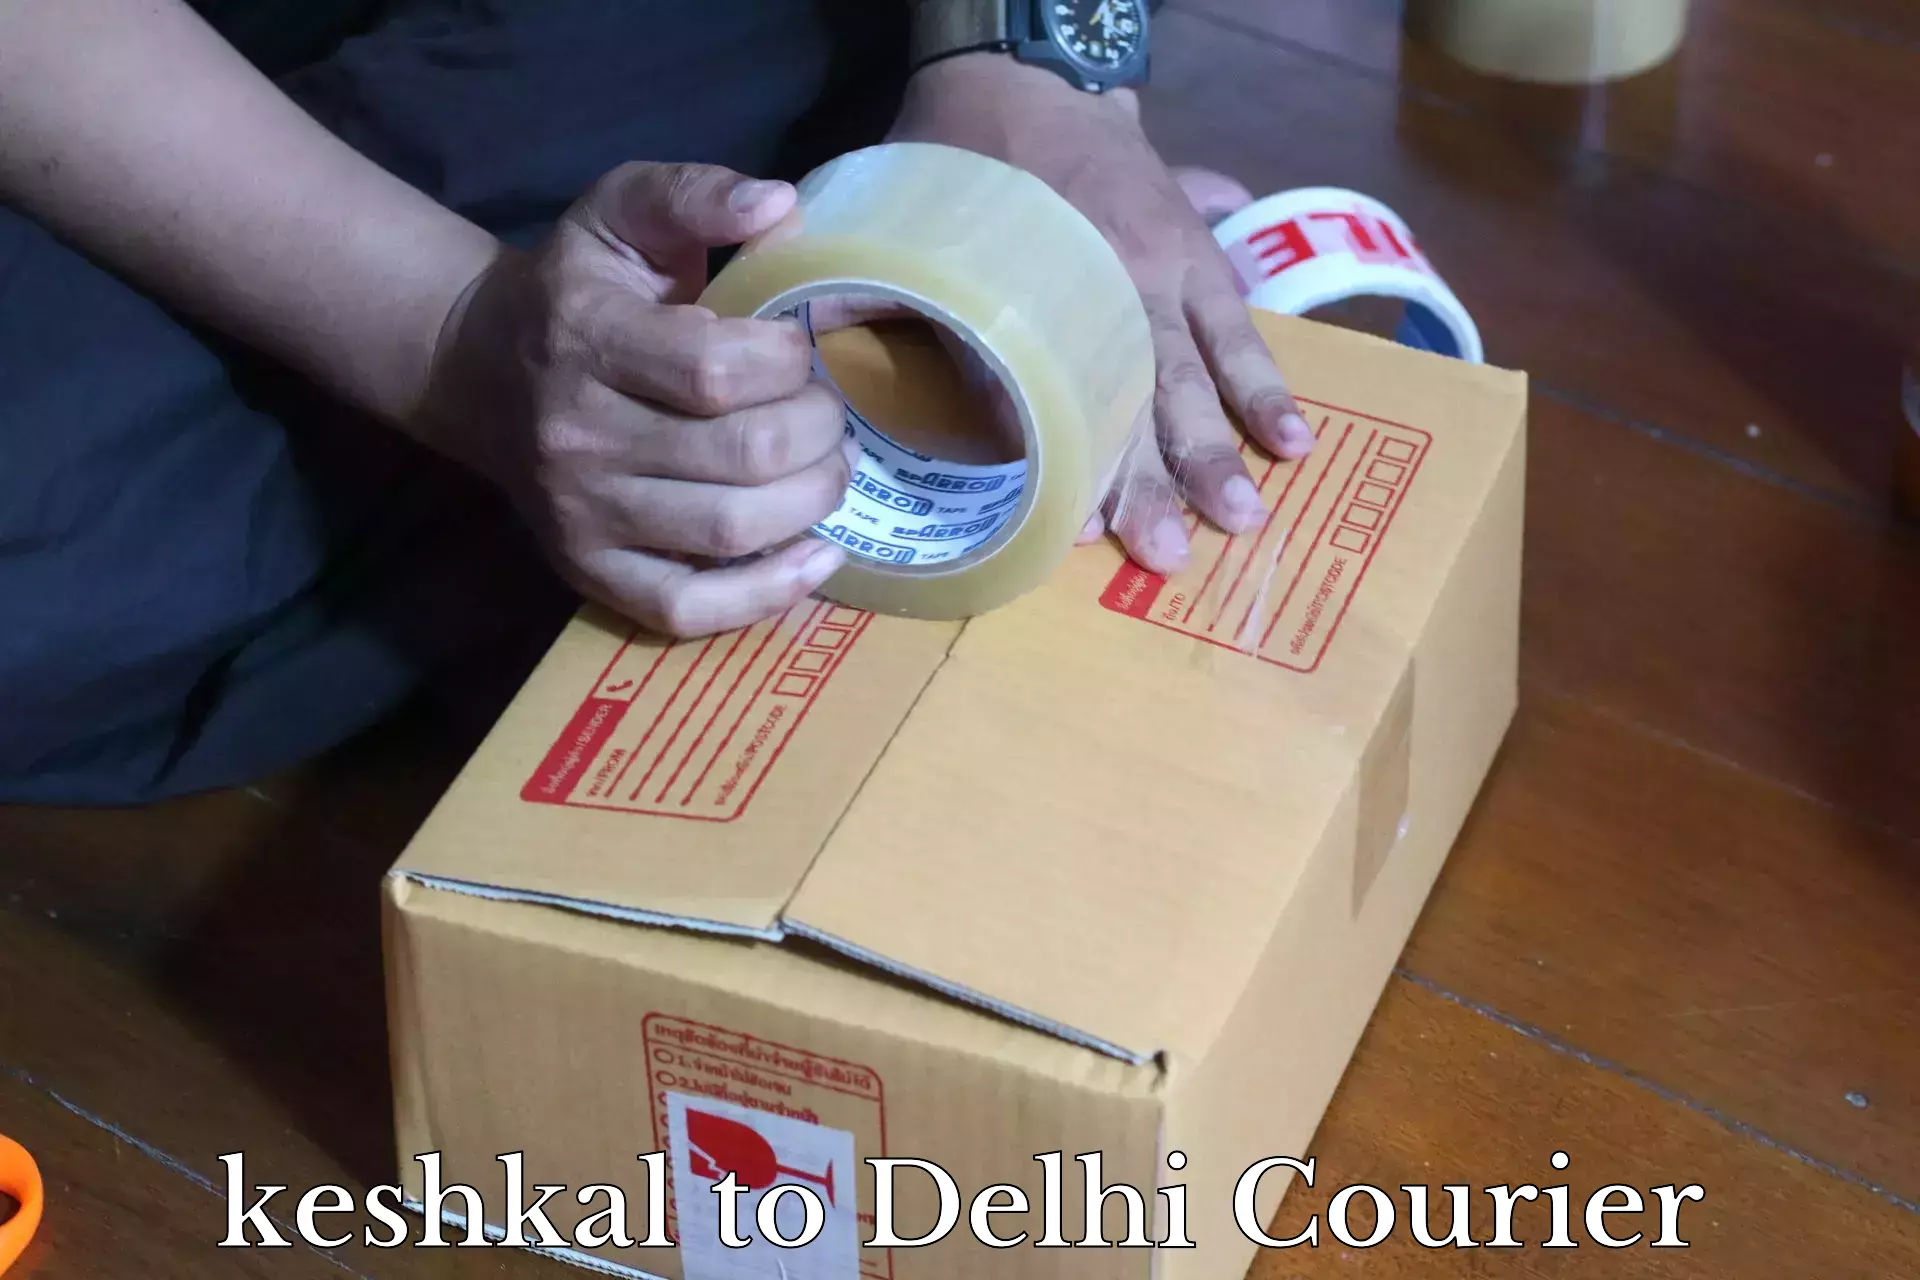 Budget-friendly shipping keshkal to University of Delhi